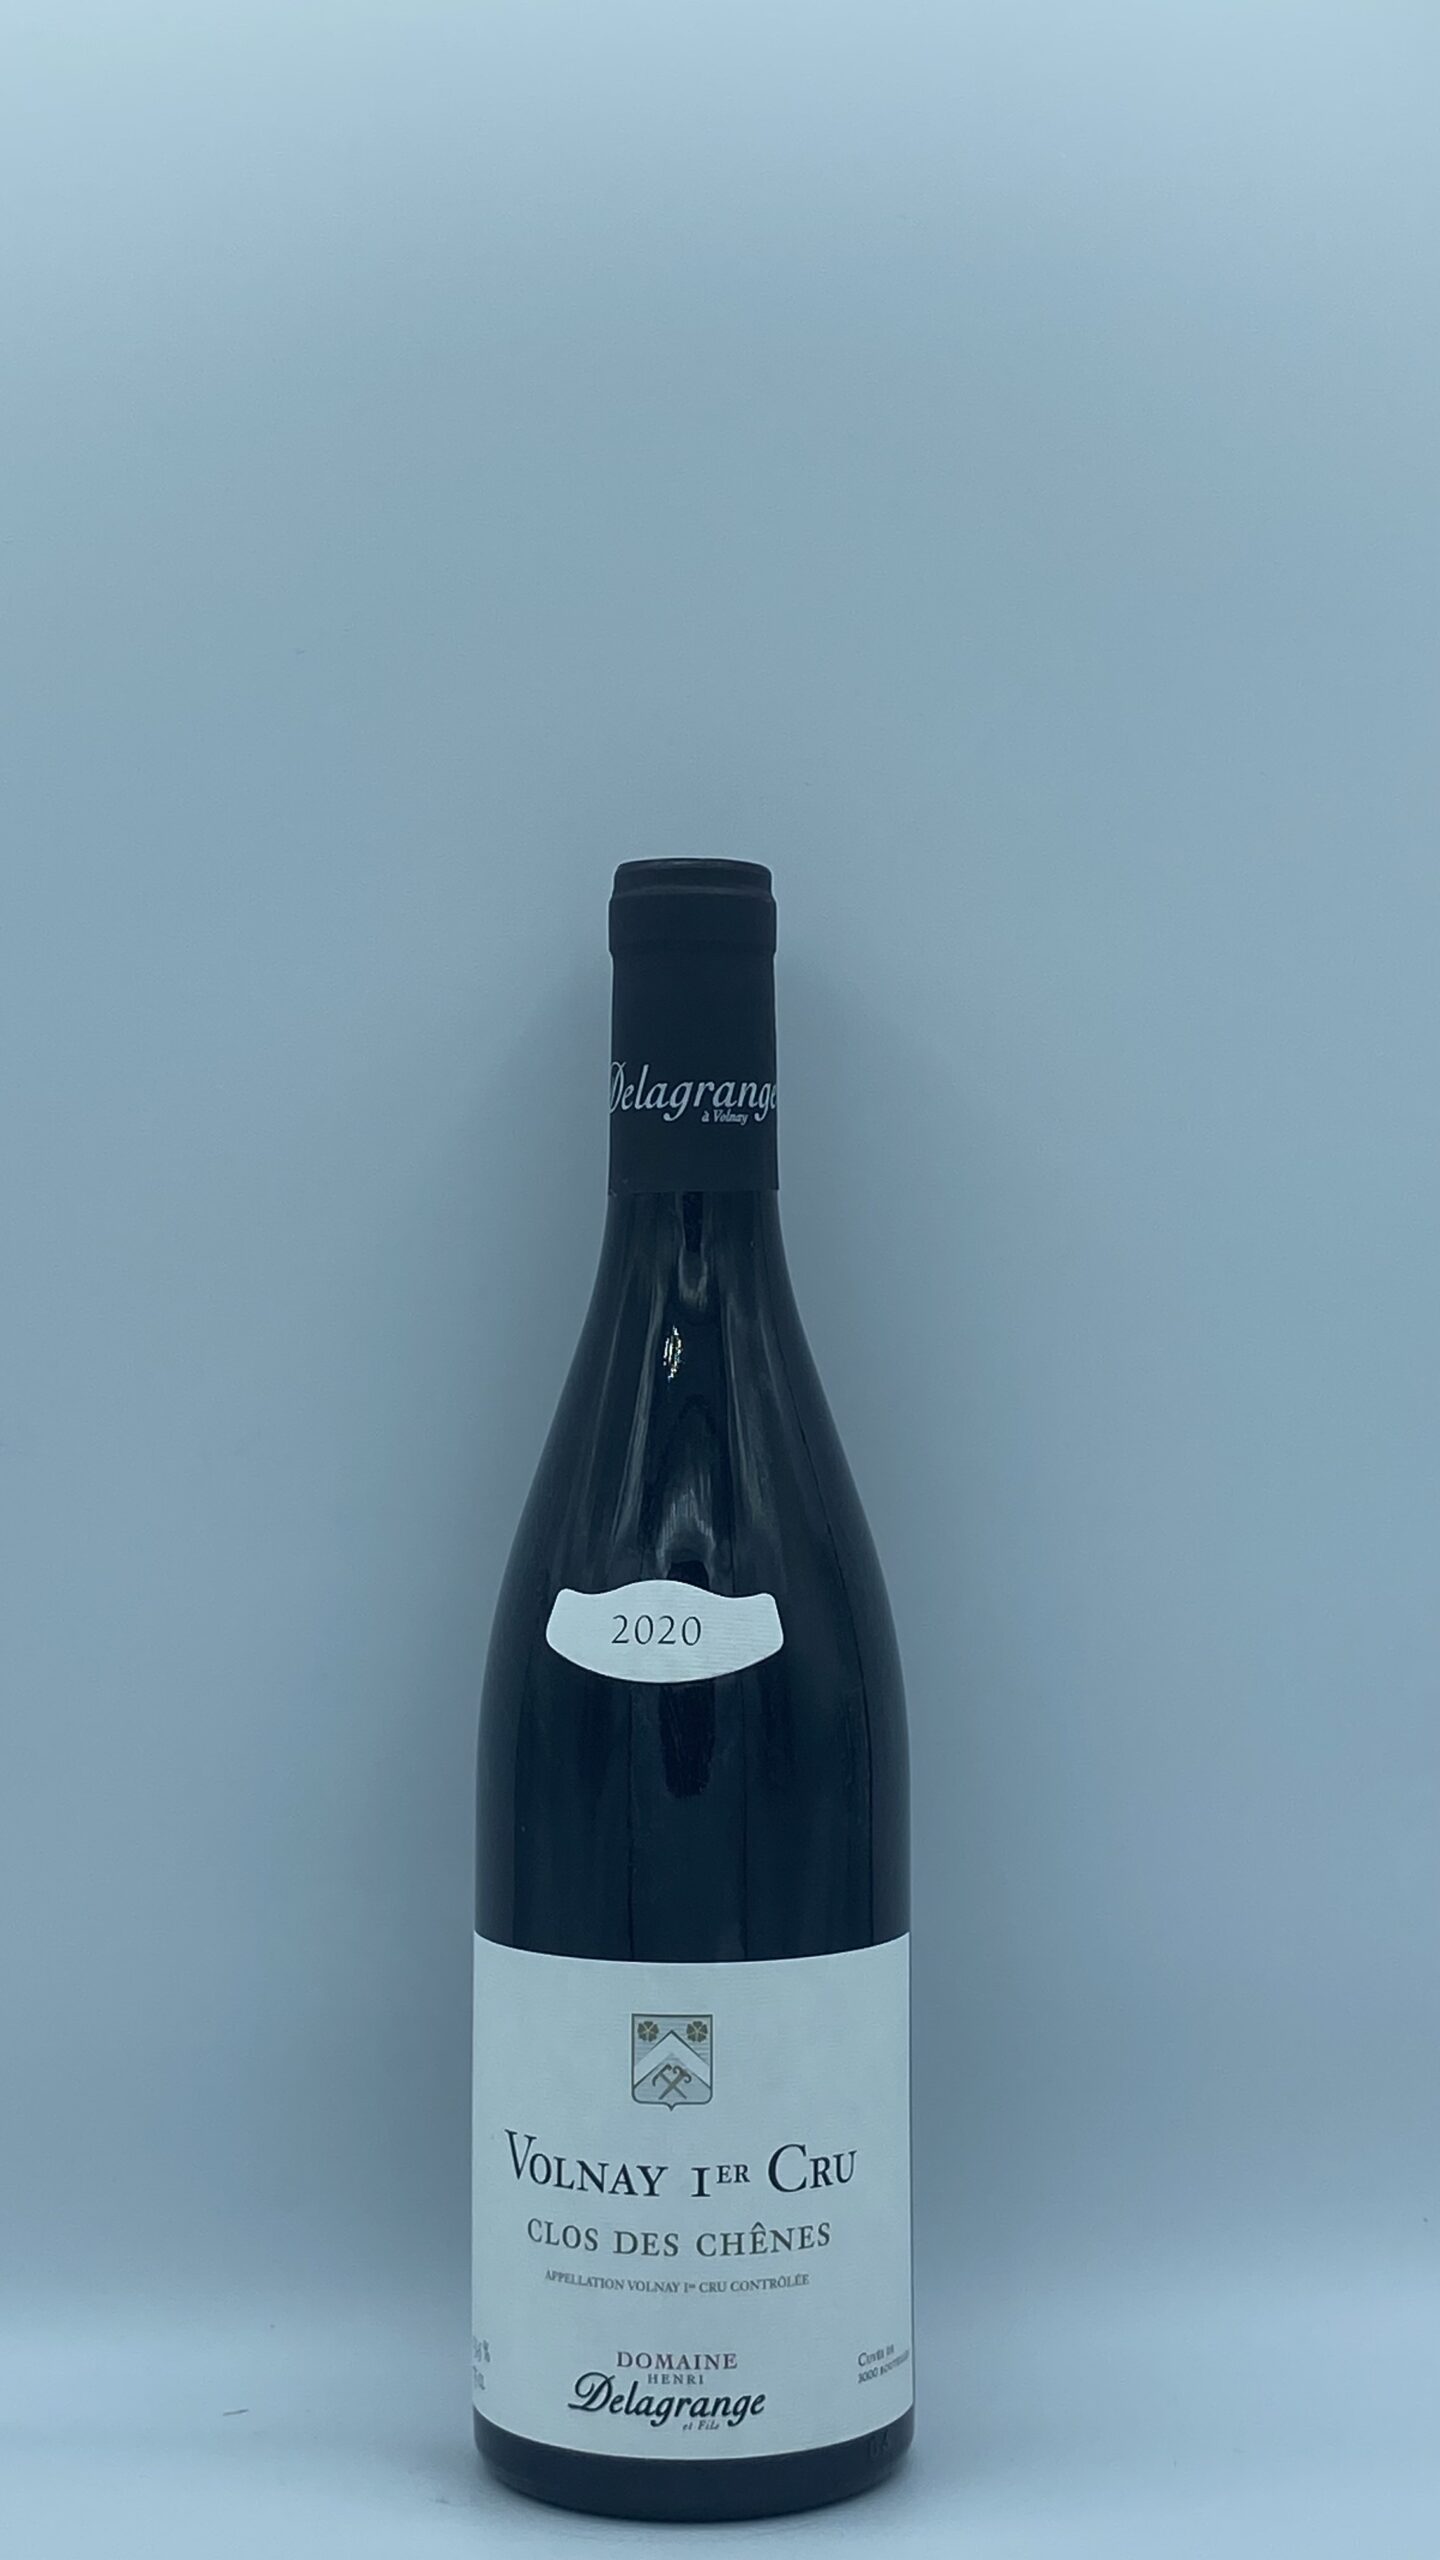 Bourgogne Volnay 1er cru “Clos des Chênes” 2020 Domaine Delagrange